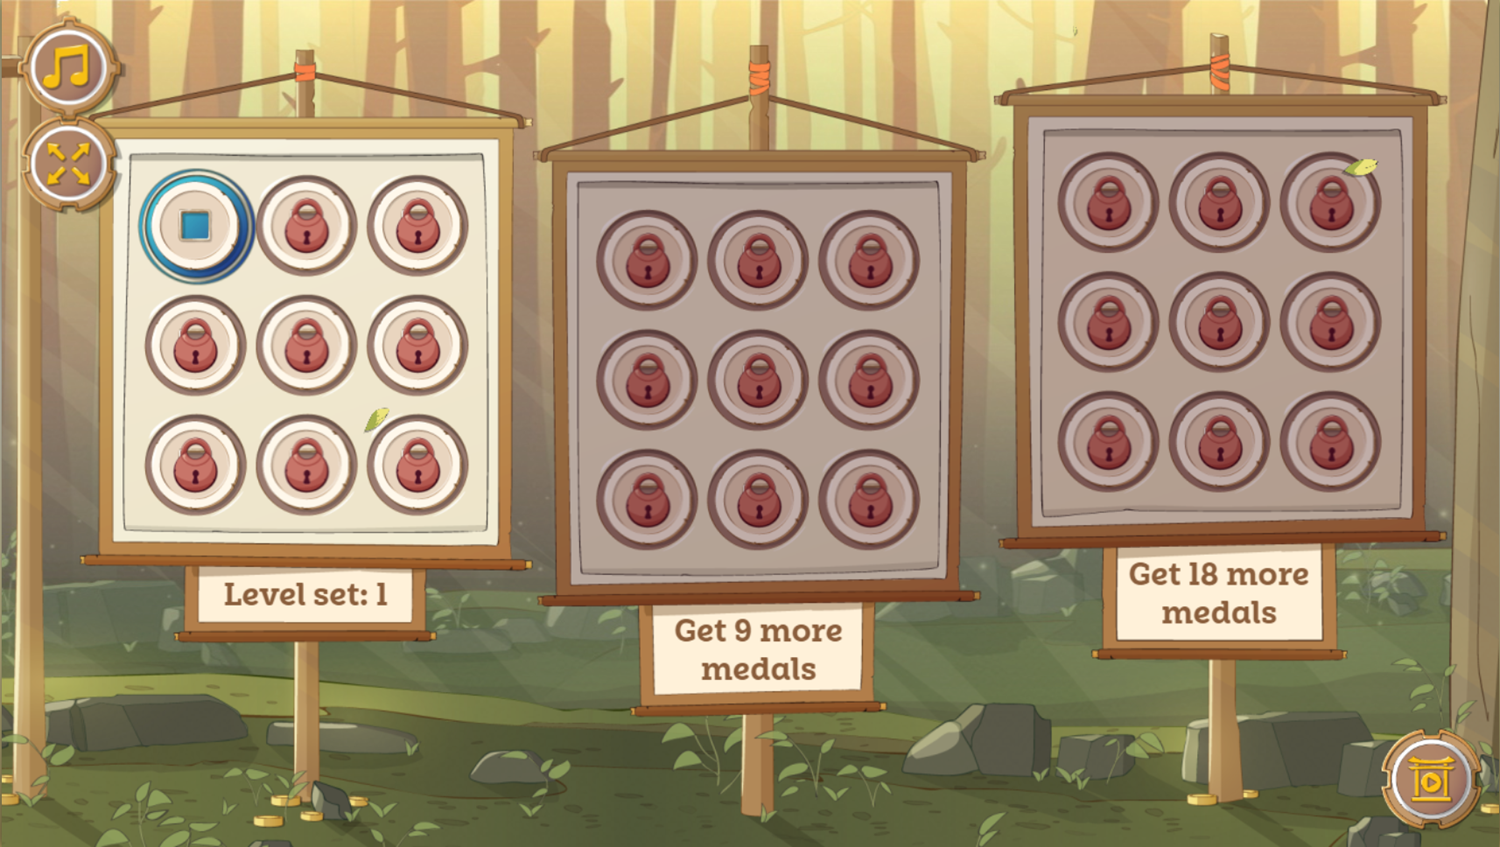 Mahjong Quest Game Level Select Screenshot.